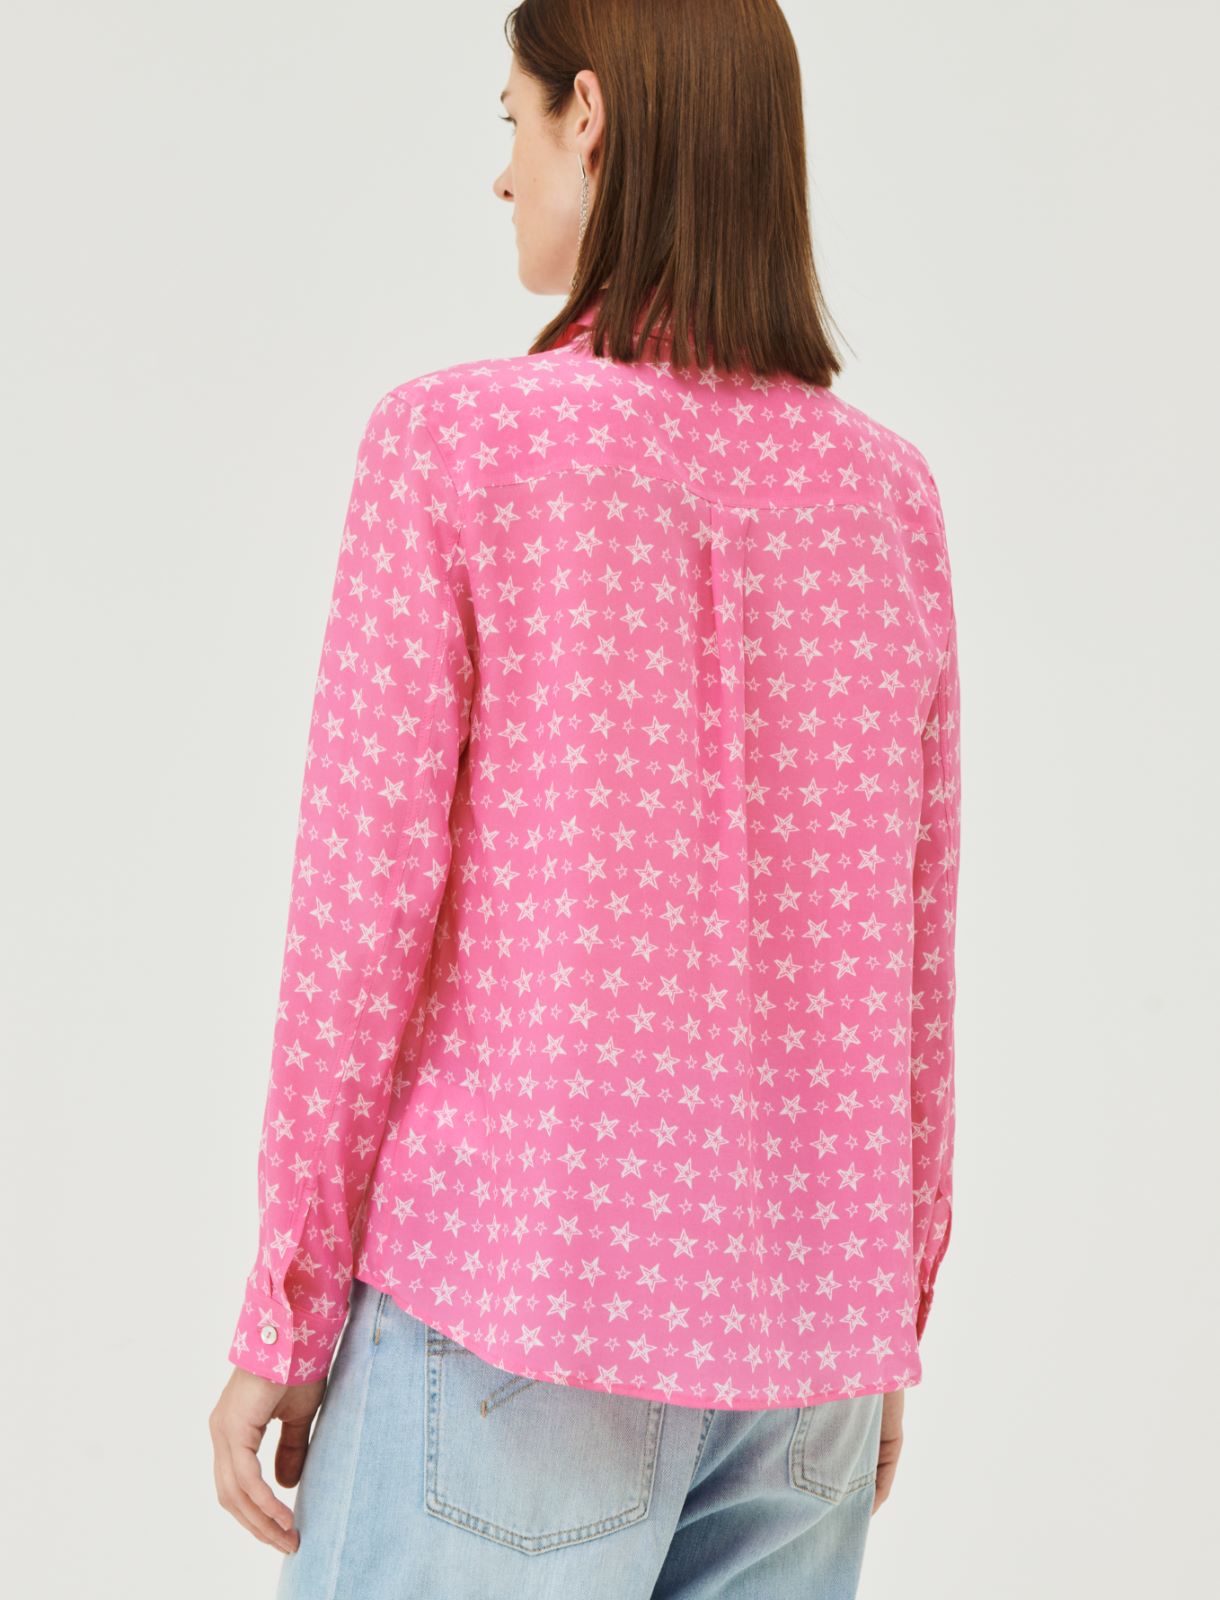 Patterned shirt - Shocking pink - Marina Rinaldi - 2